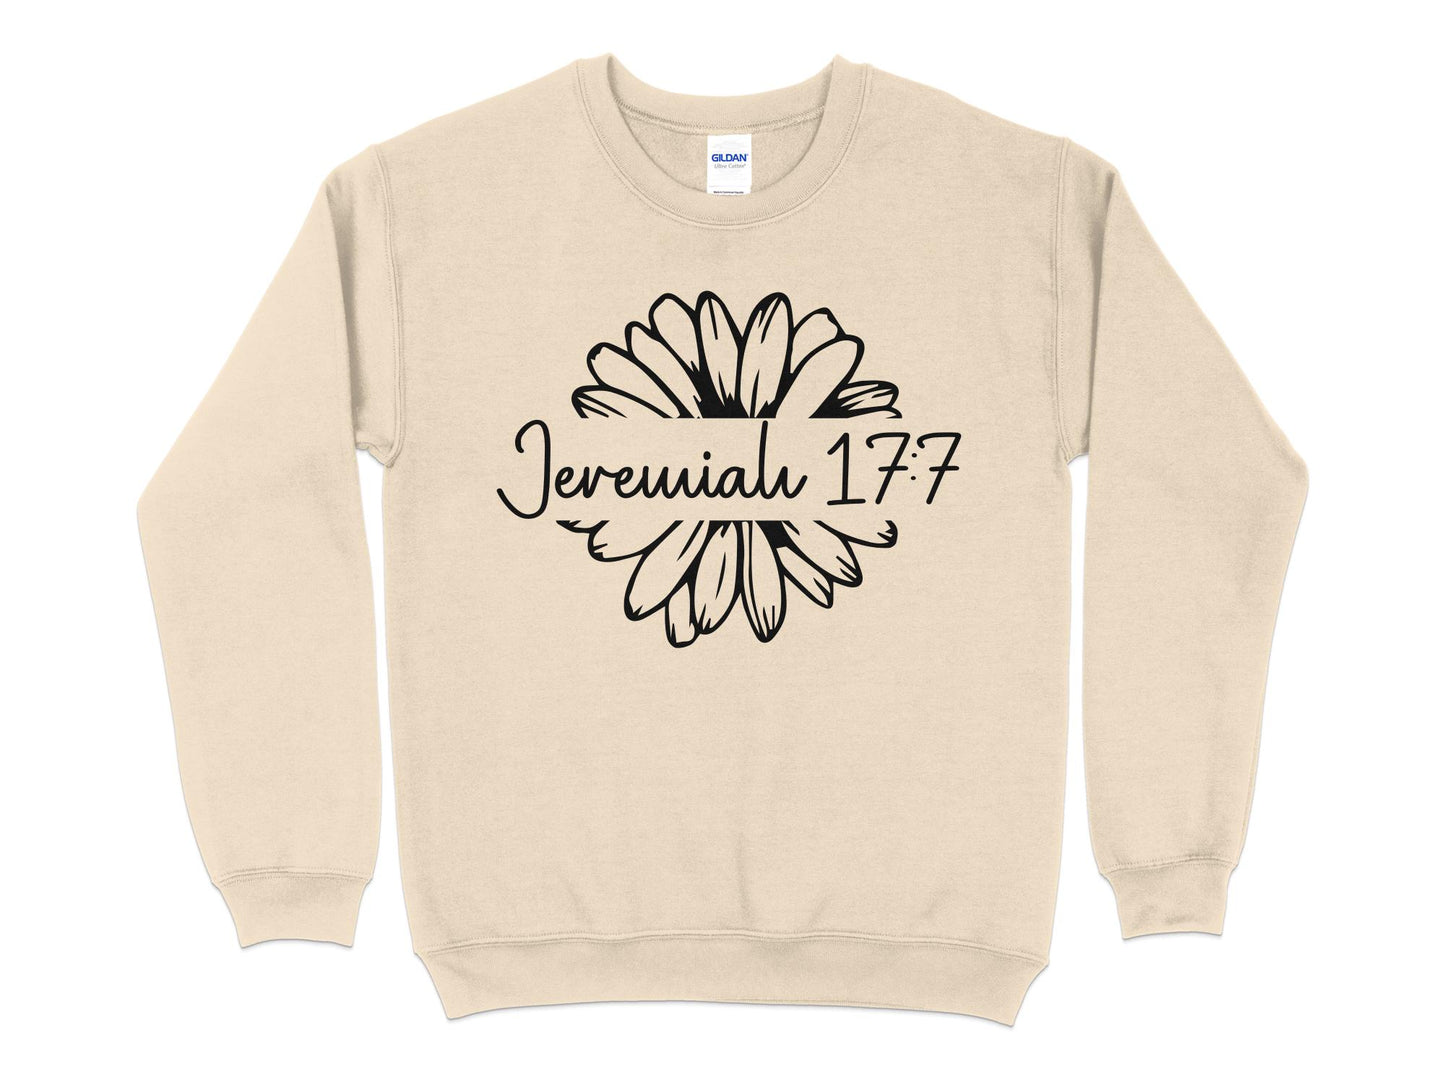 Unisex Jeremiah 17:7 Floral Sweatshirt, Christian Scripture Sweater, Bible Verse Pullover, Casual Spiritual Clothing, Faith-Based Top - Mardonyx Sweatshirt S / Sand